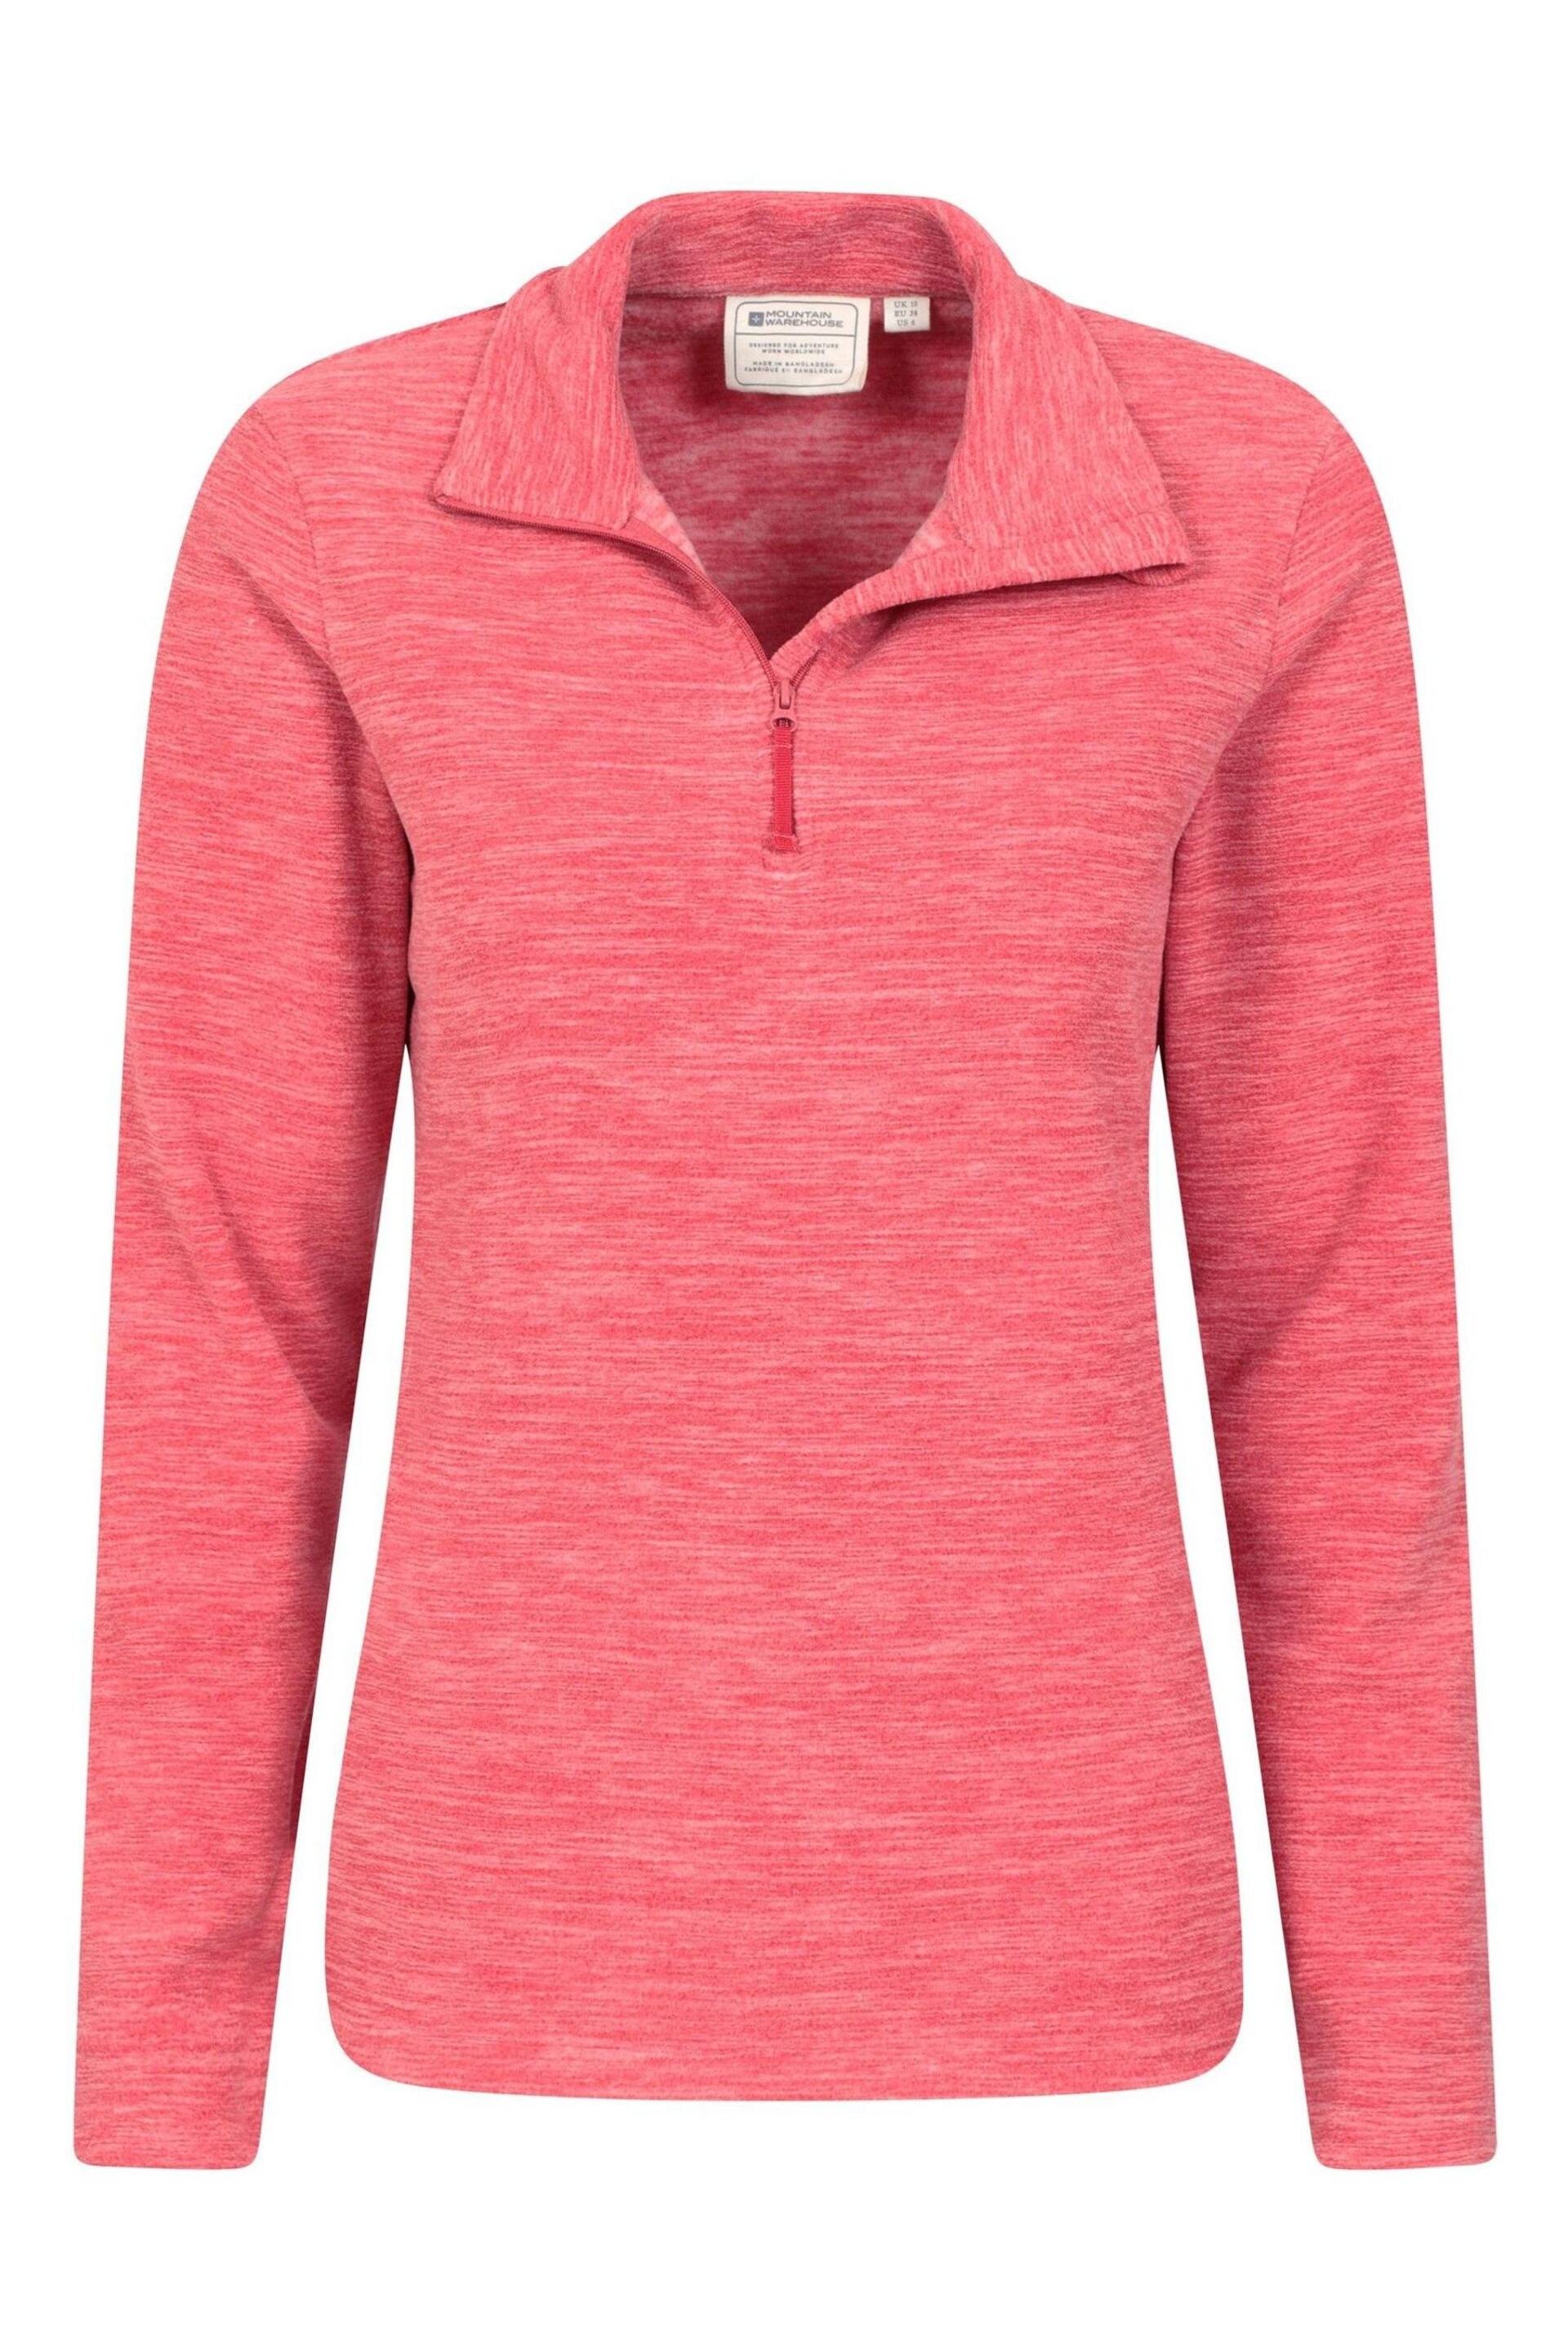 Mountain Warehouse Coral Pink Womens Snowdon Melange Half-Zip Fleece - Image 1 of 3